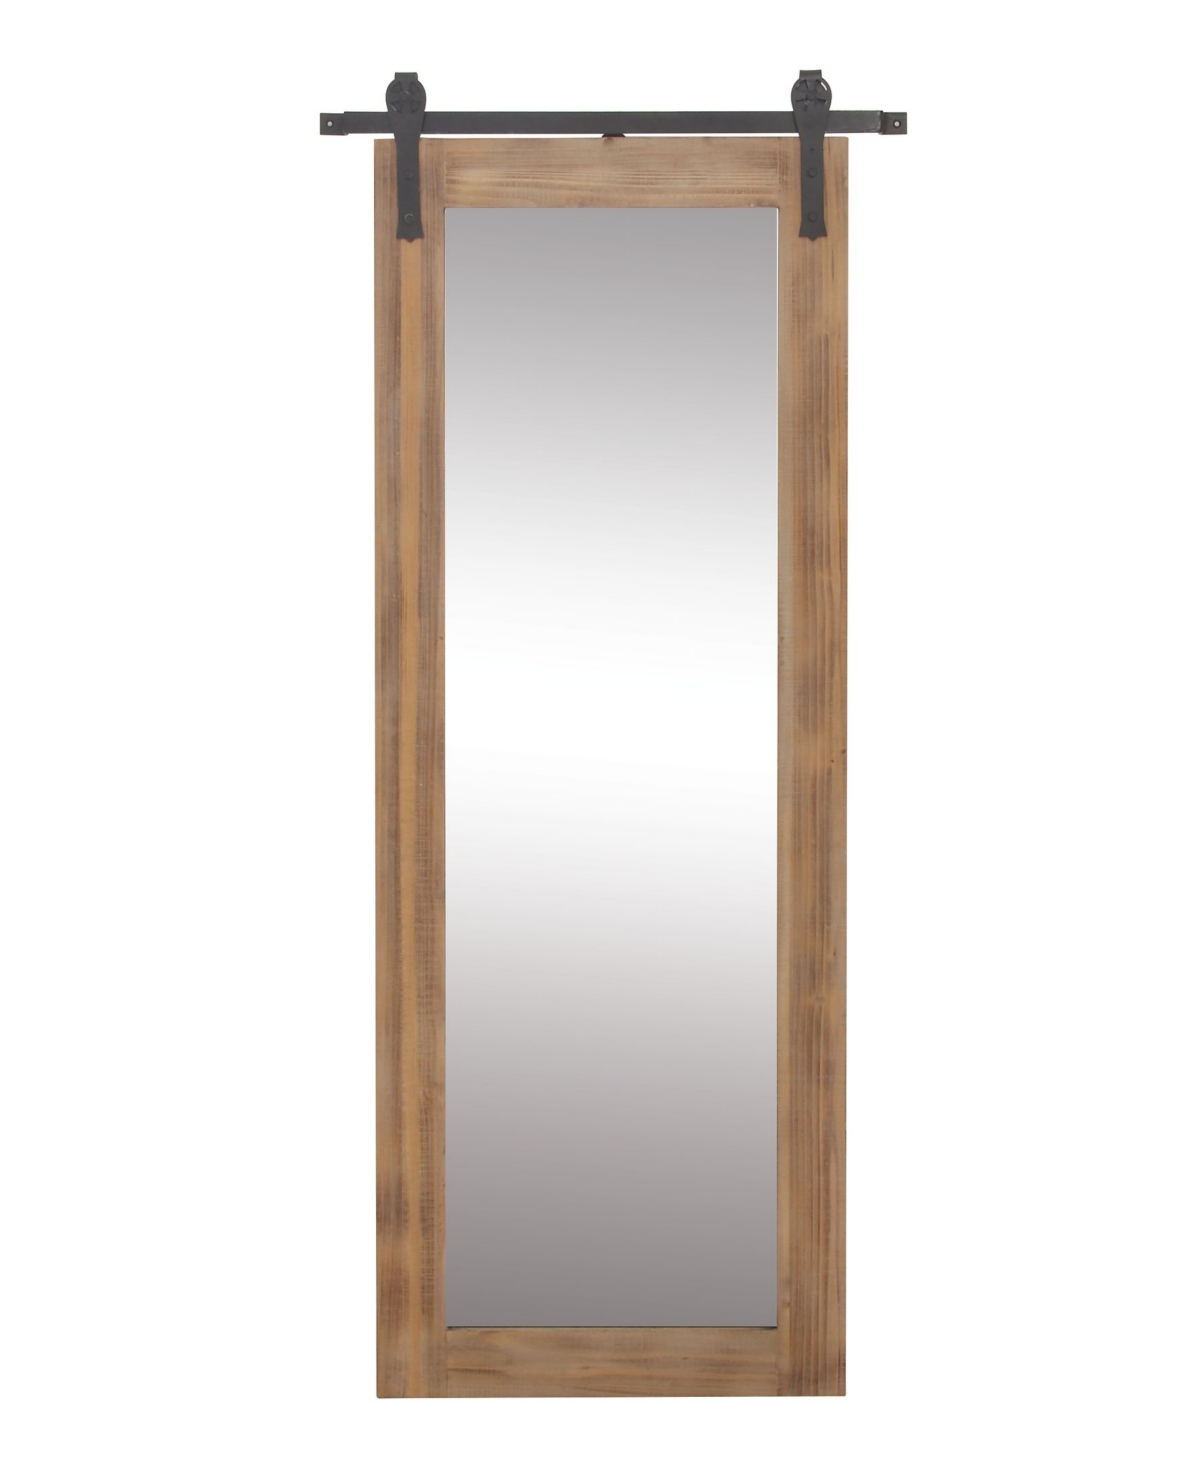 Industrial Wood Wall Mirror, 71" x 34" - Brown